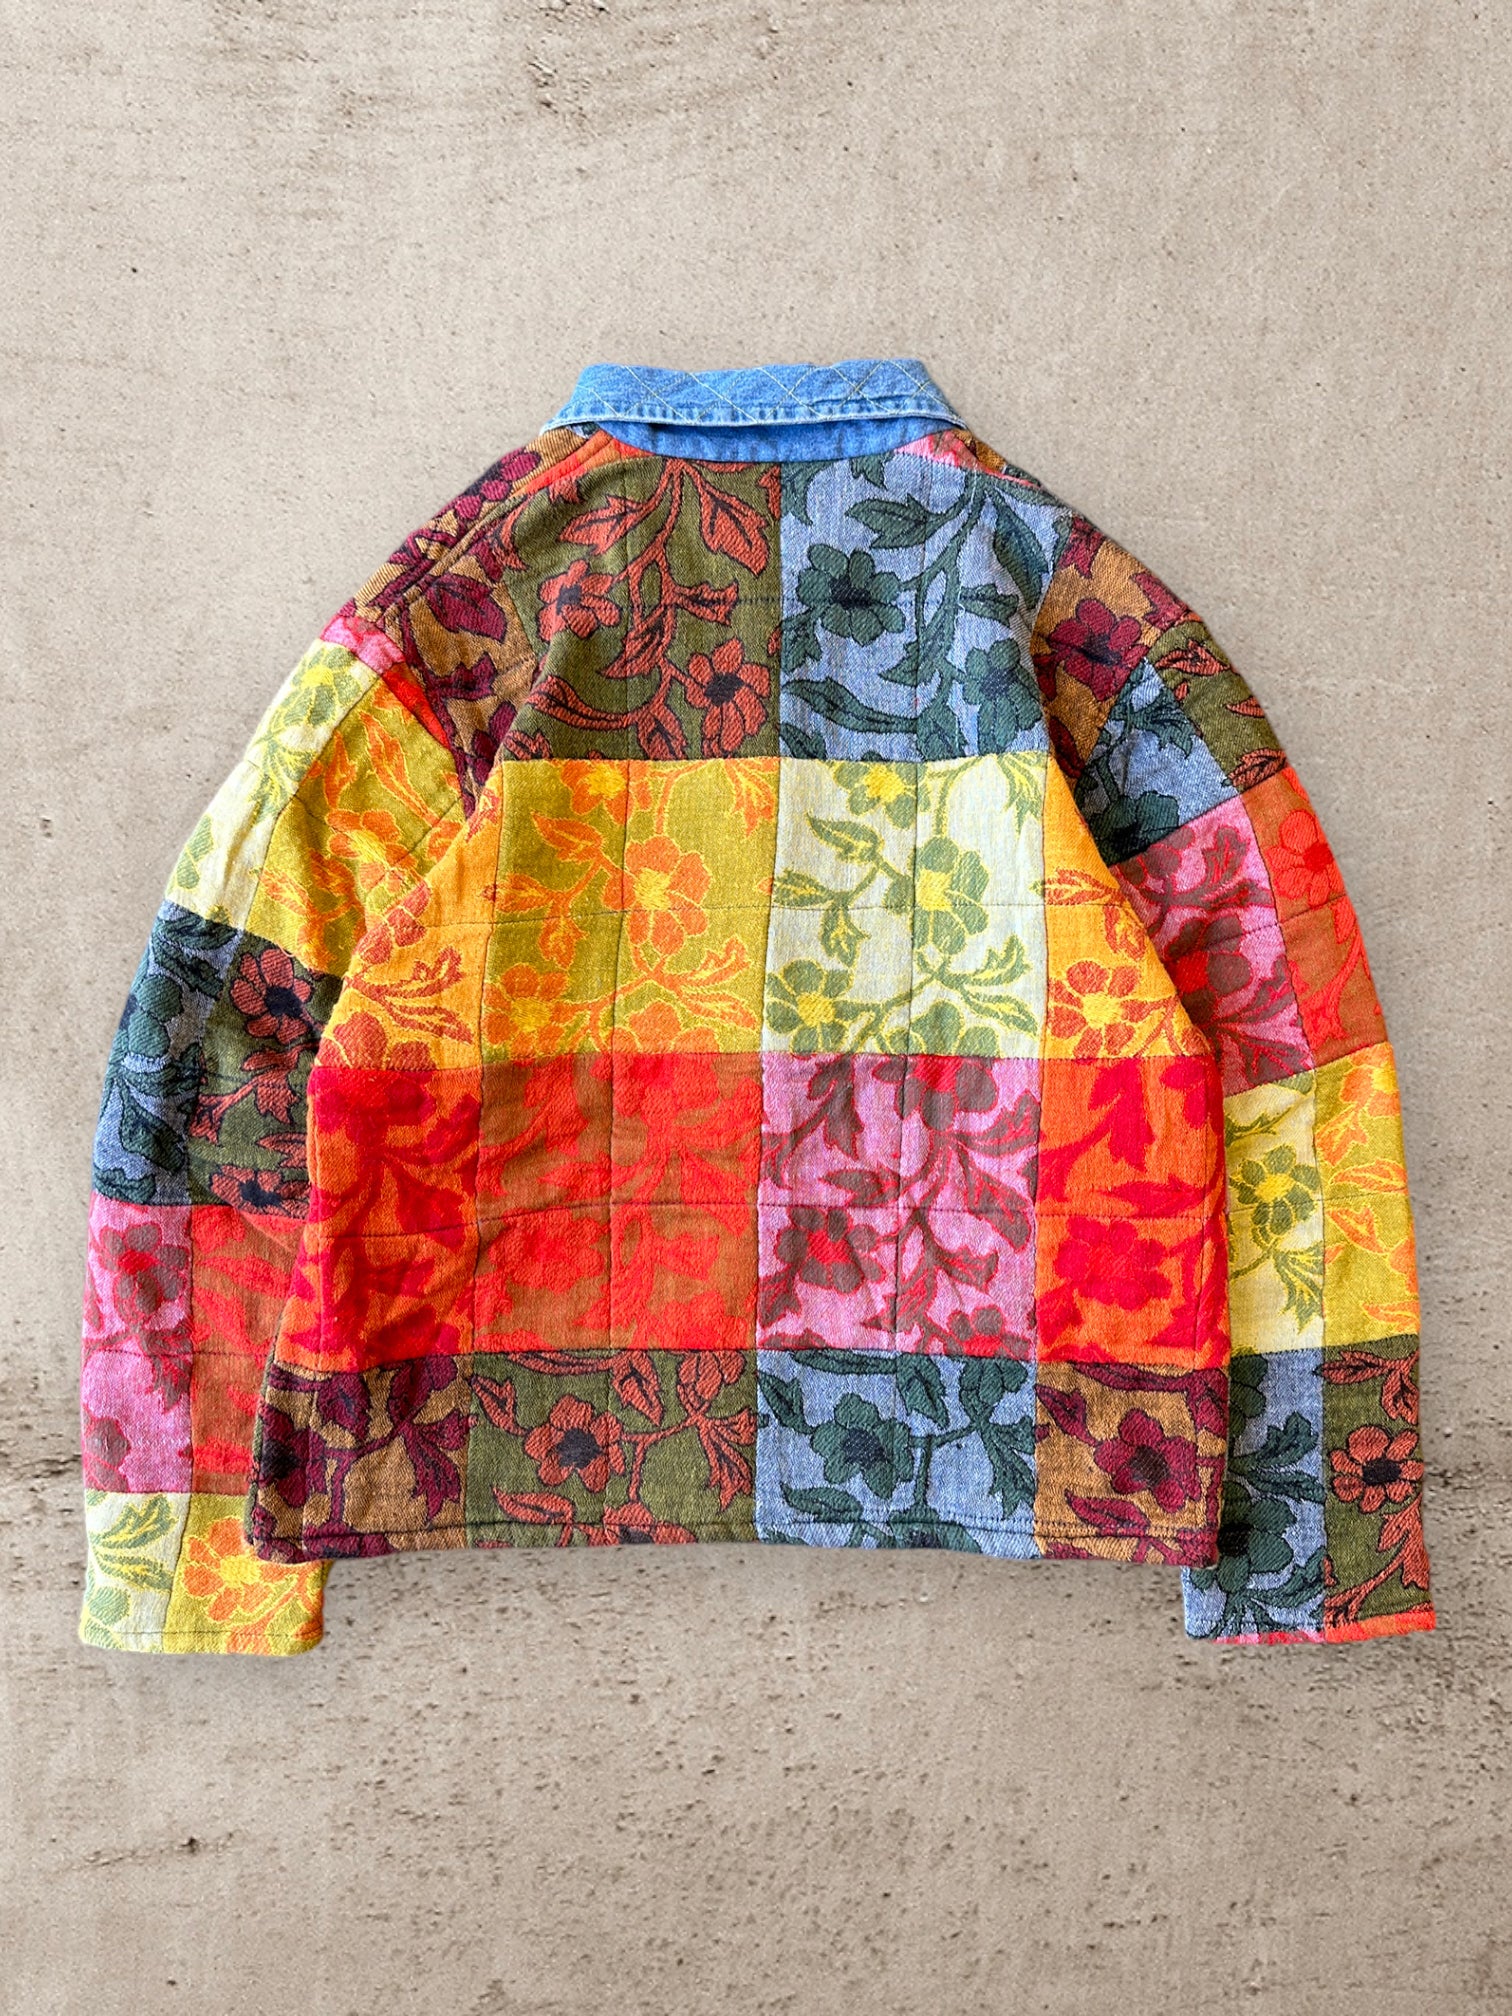 90s Tantrums Patchwork Floral Jacket - Medium